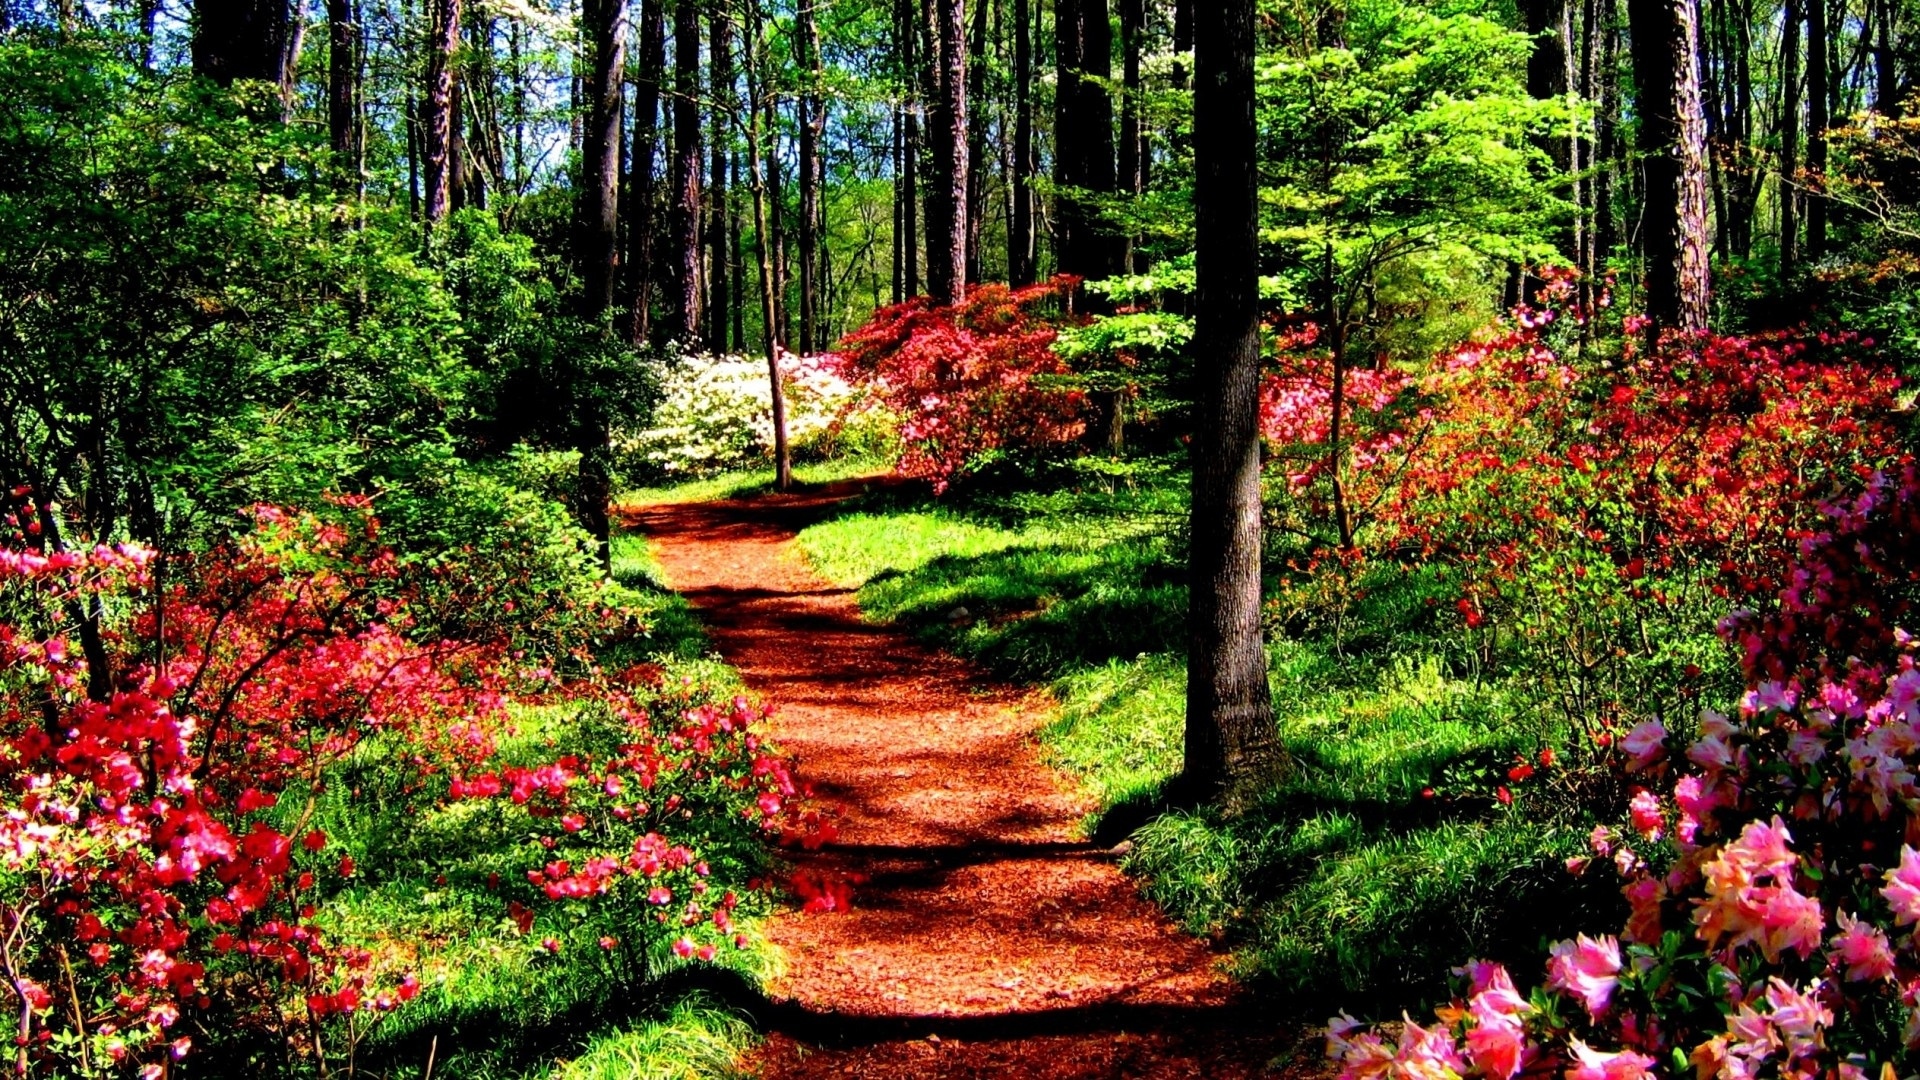 earth, forest, flower, nature, path, vegetation